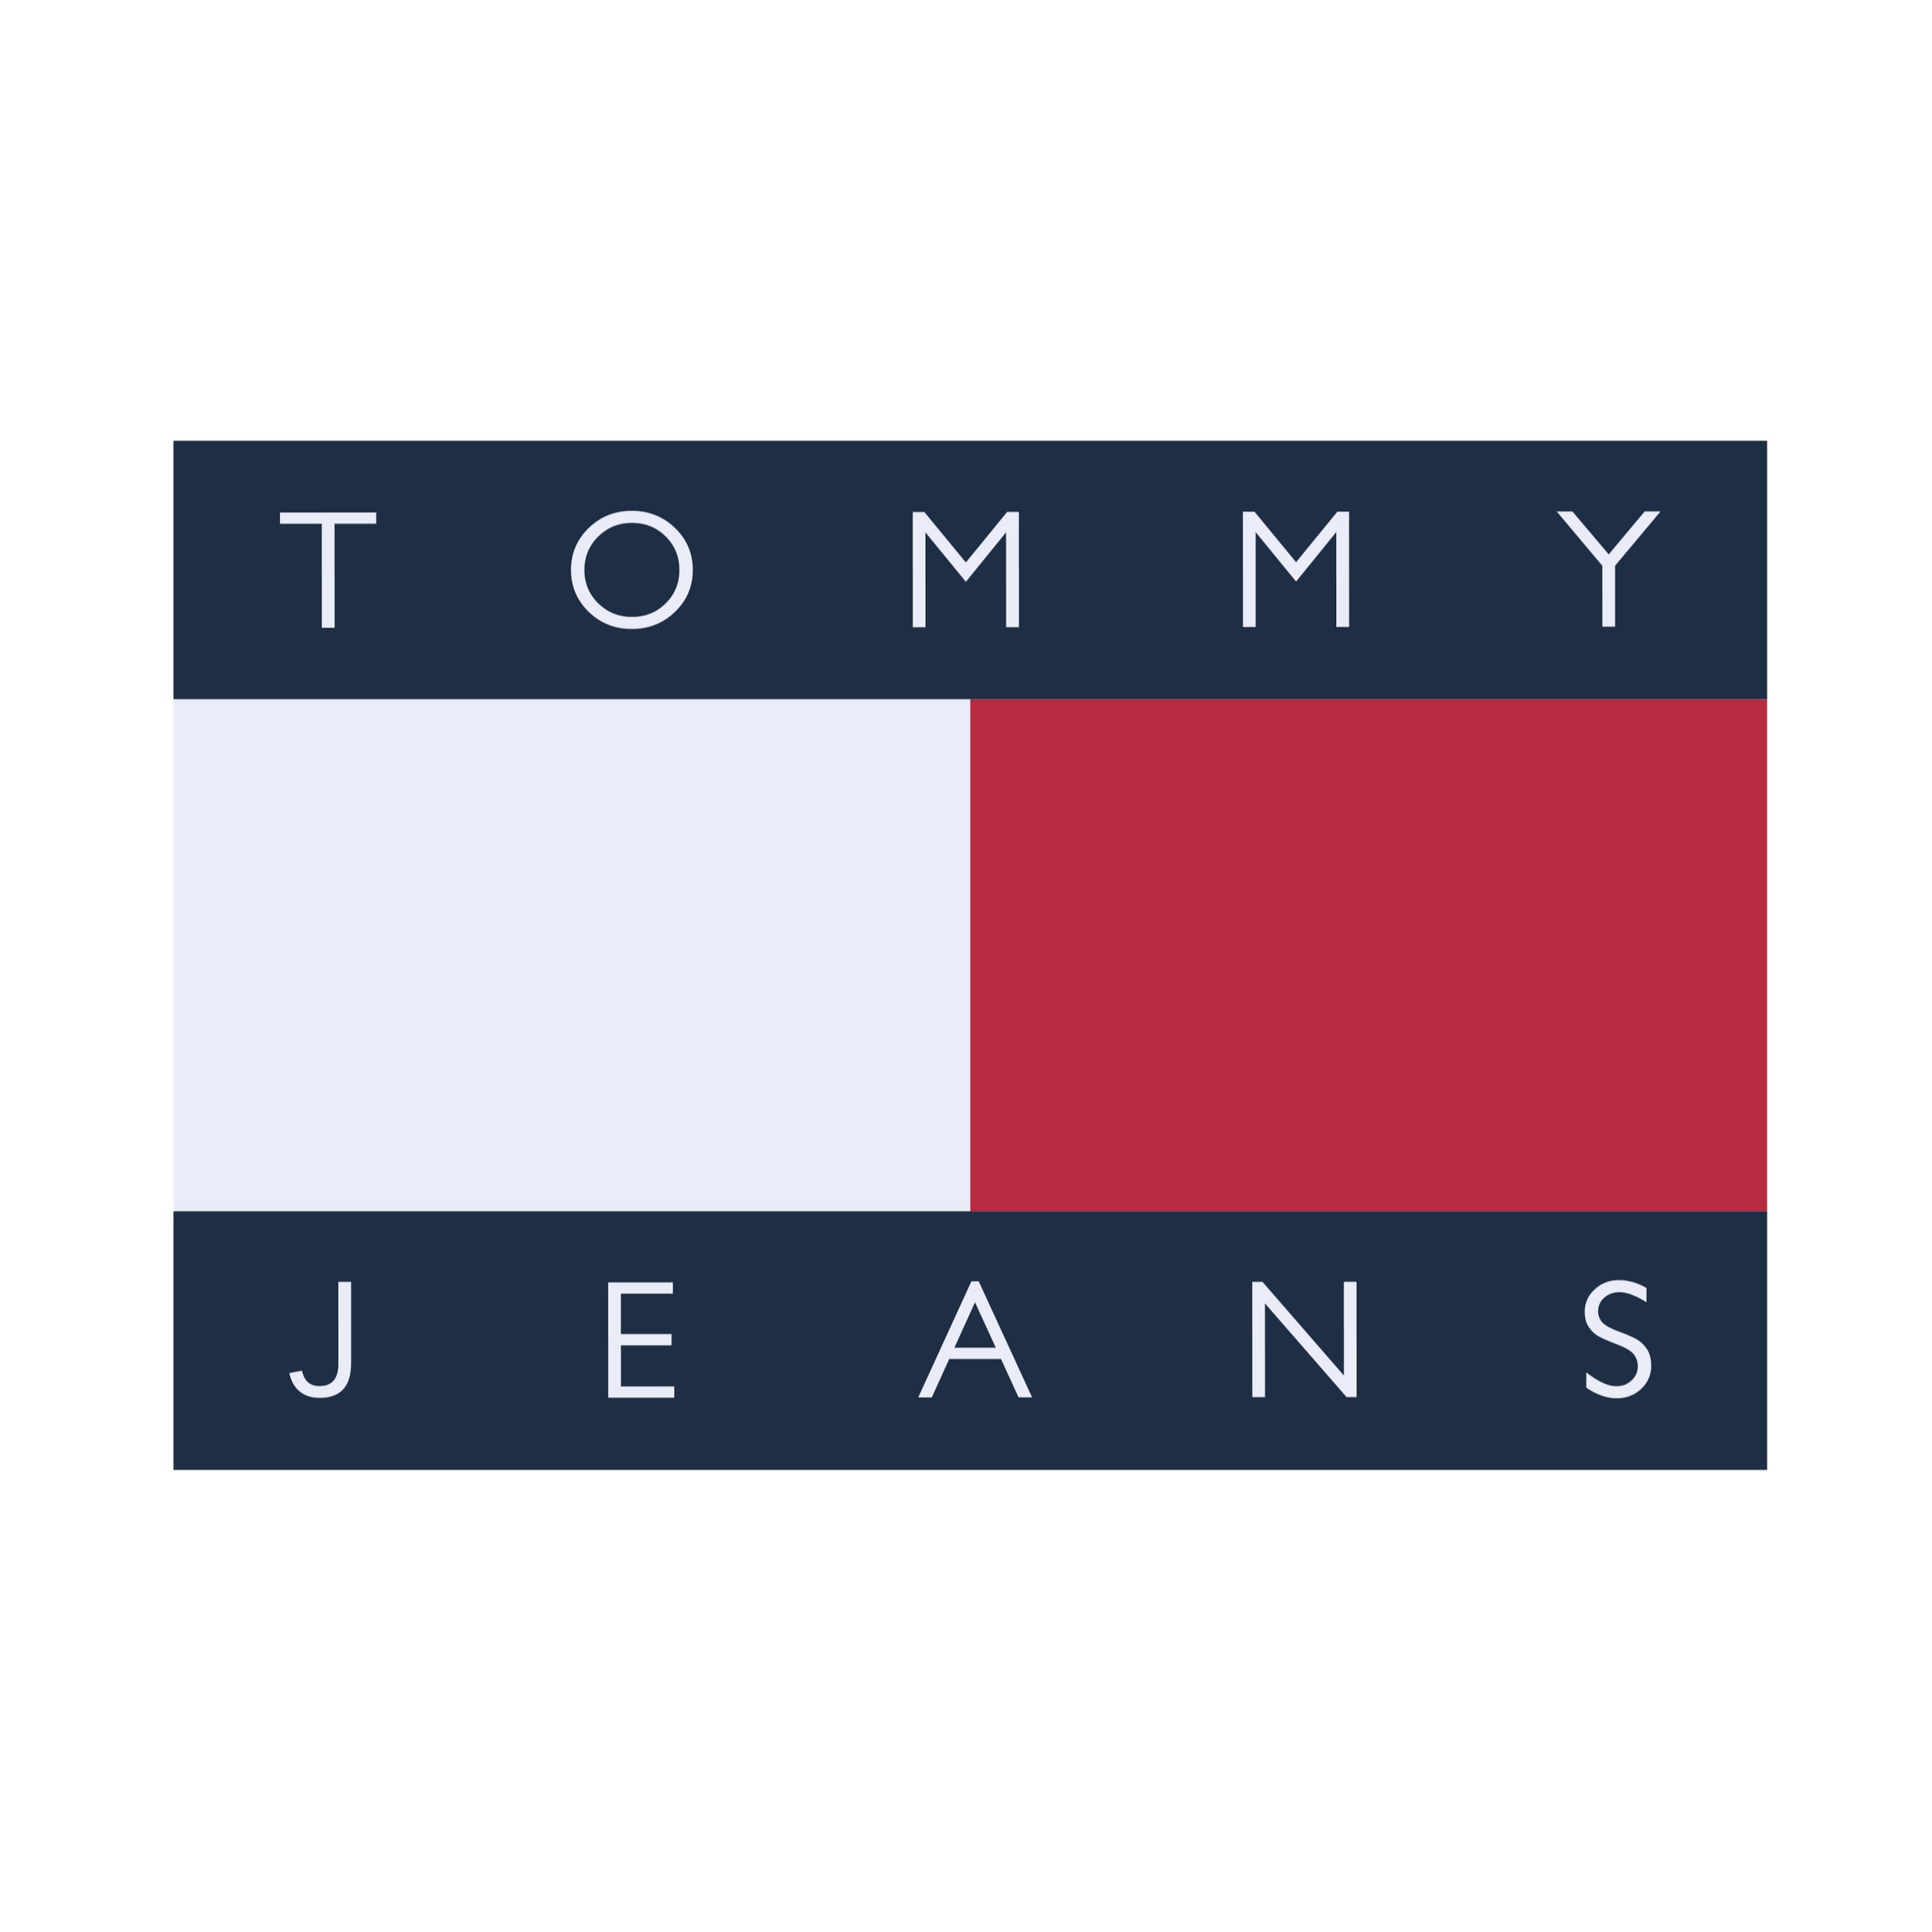 Tommy Jeans Amersfoort 033 445 0444